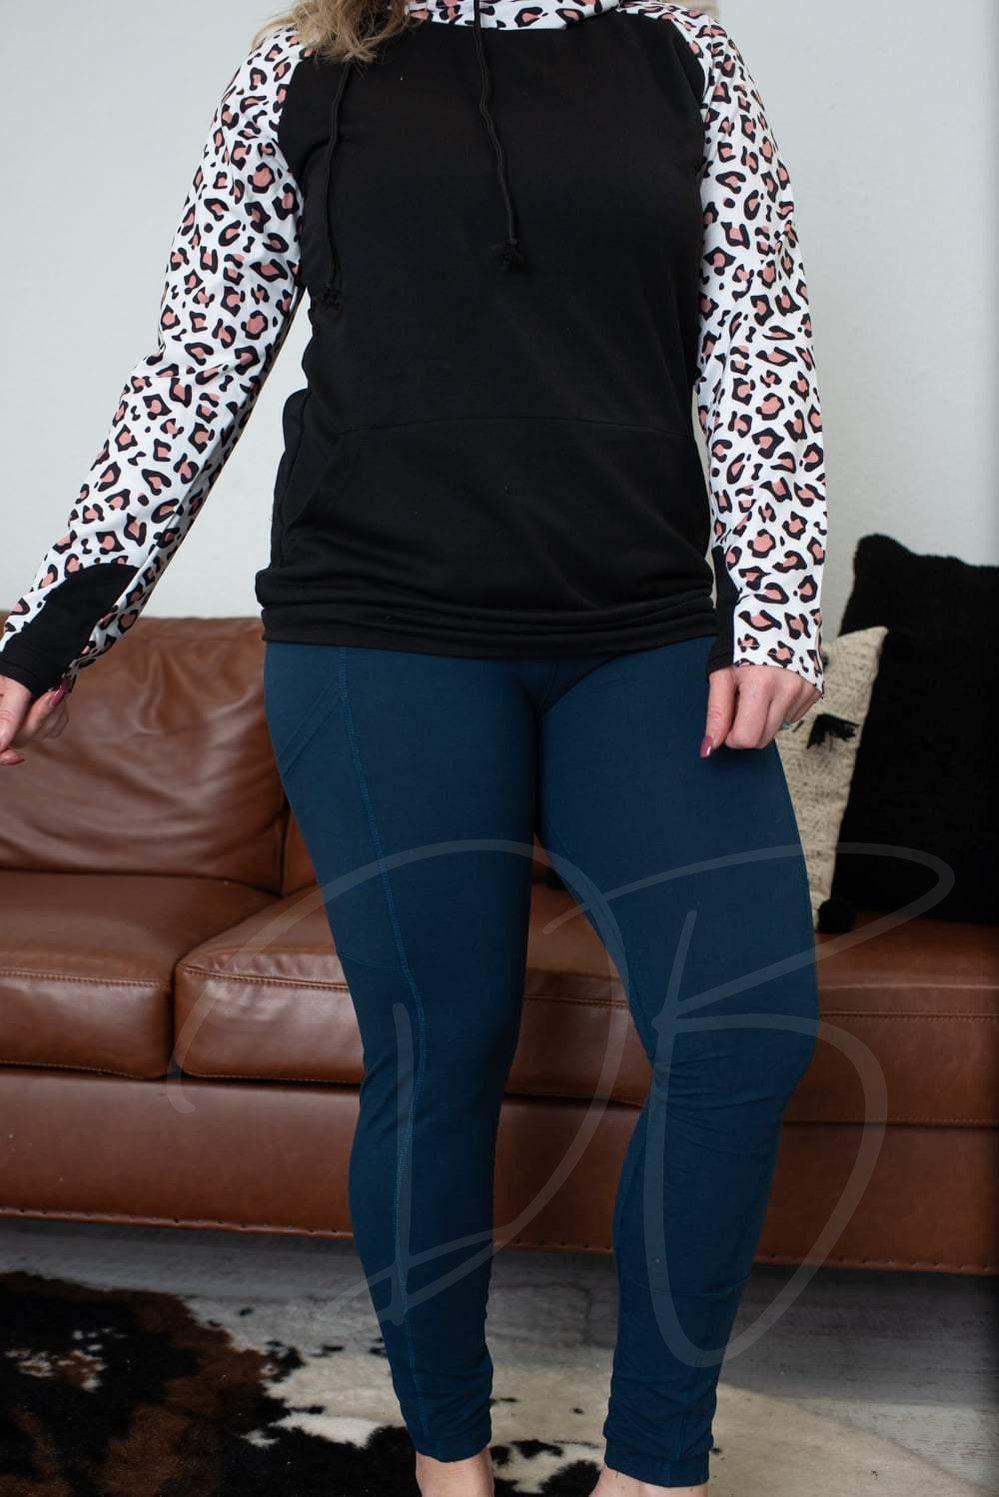 BSP Women's Full Length Legging with Jersey Pocket- Plus Size 